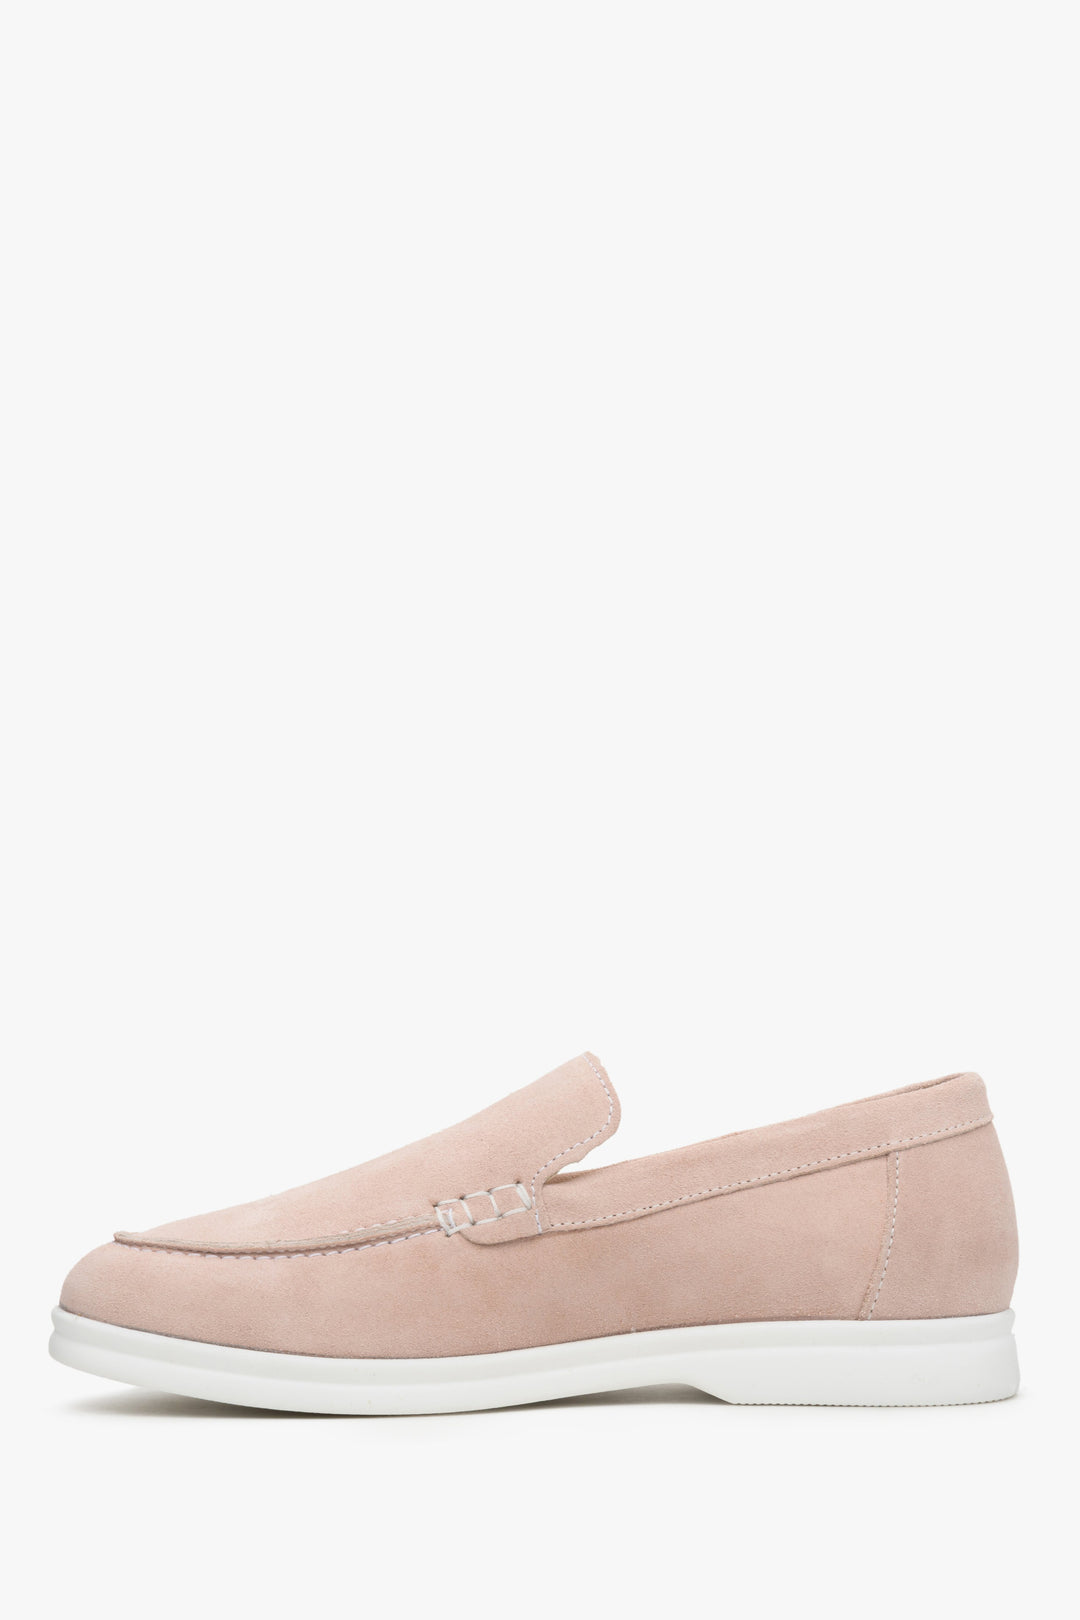 Estro light pink suede moccasins for women - shoe profile.